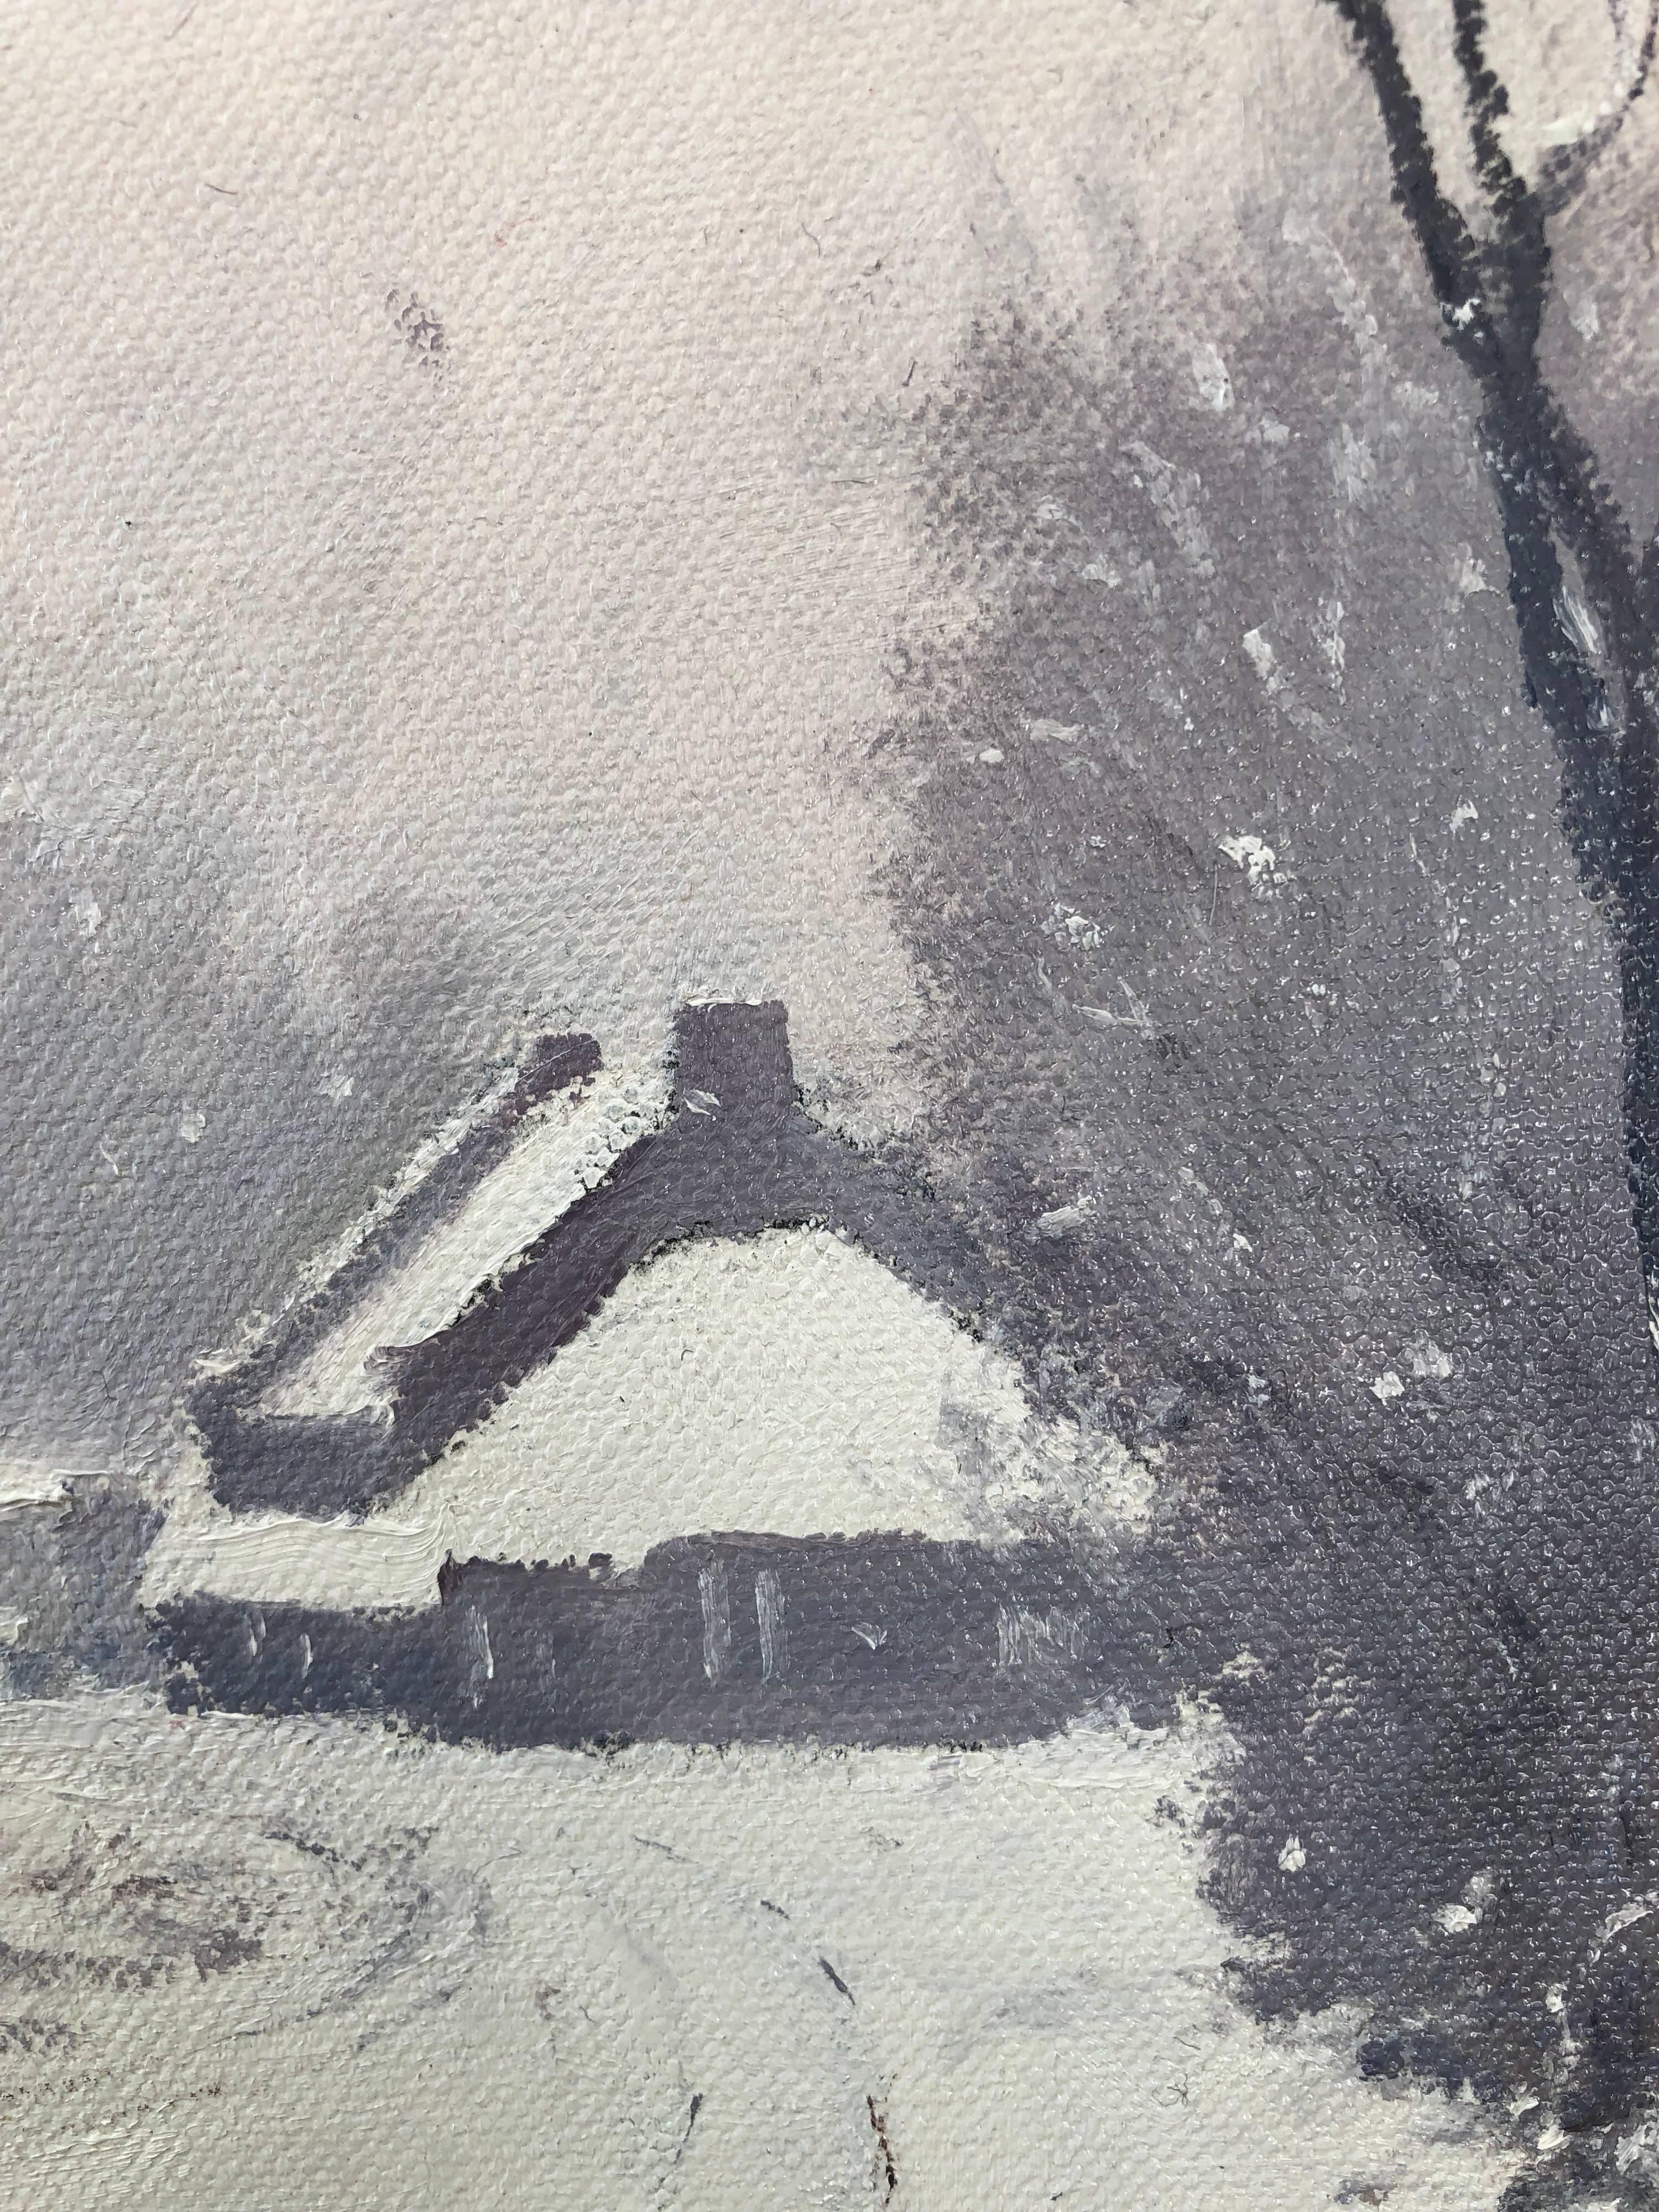 Winter Tracks - American Realist Painting by Brian Kliewer